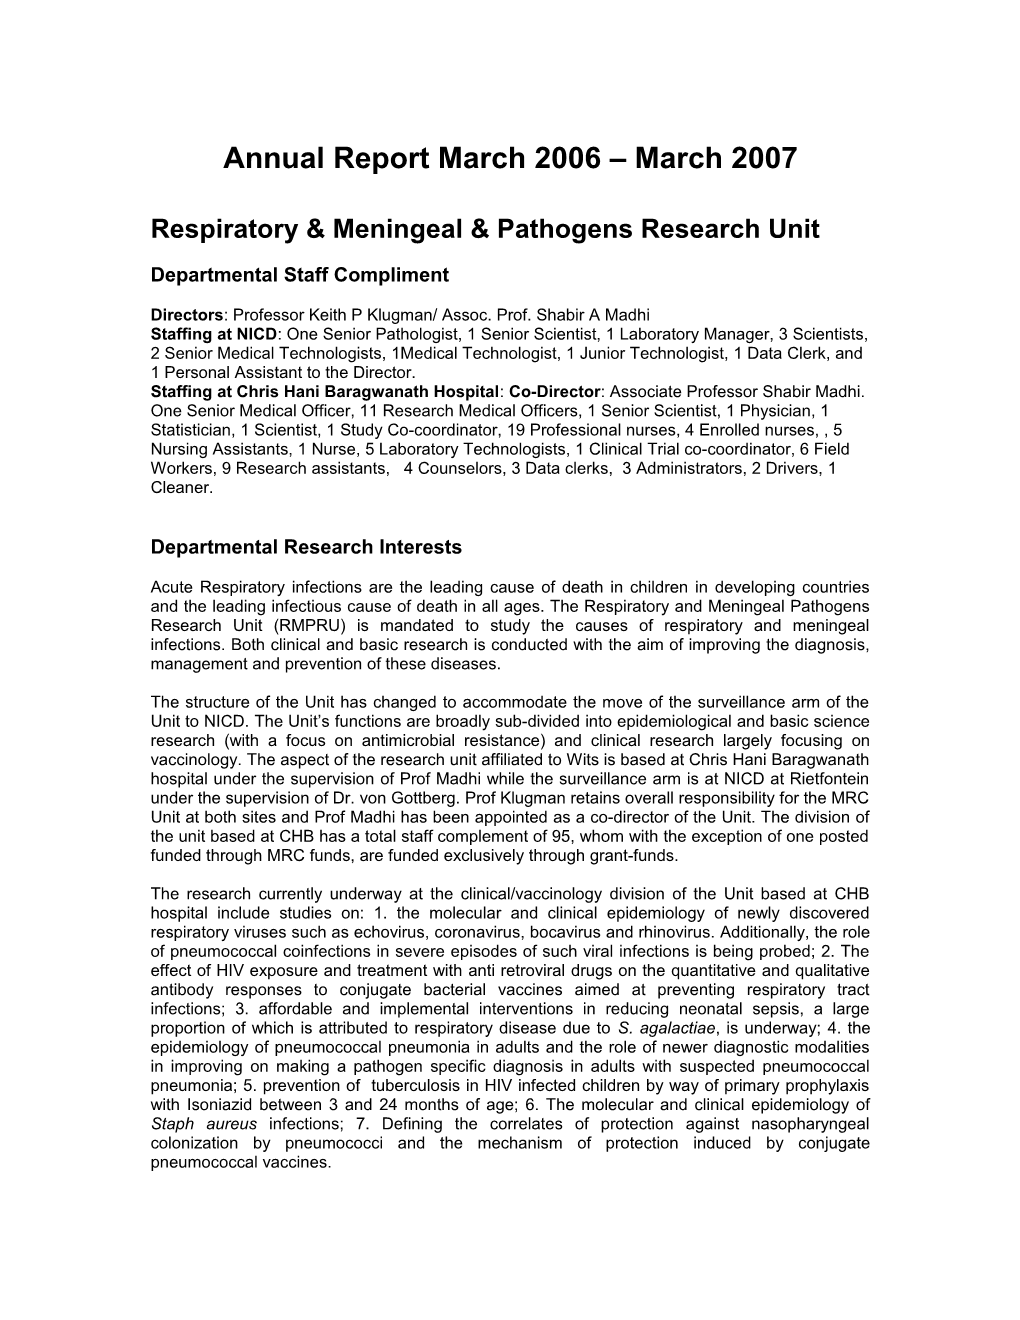 Respiratory & Meningeal Pathogens Research Unit